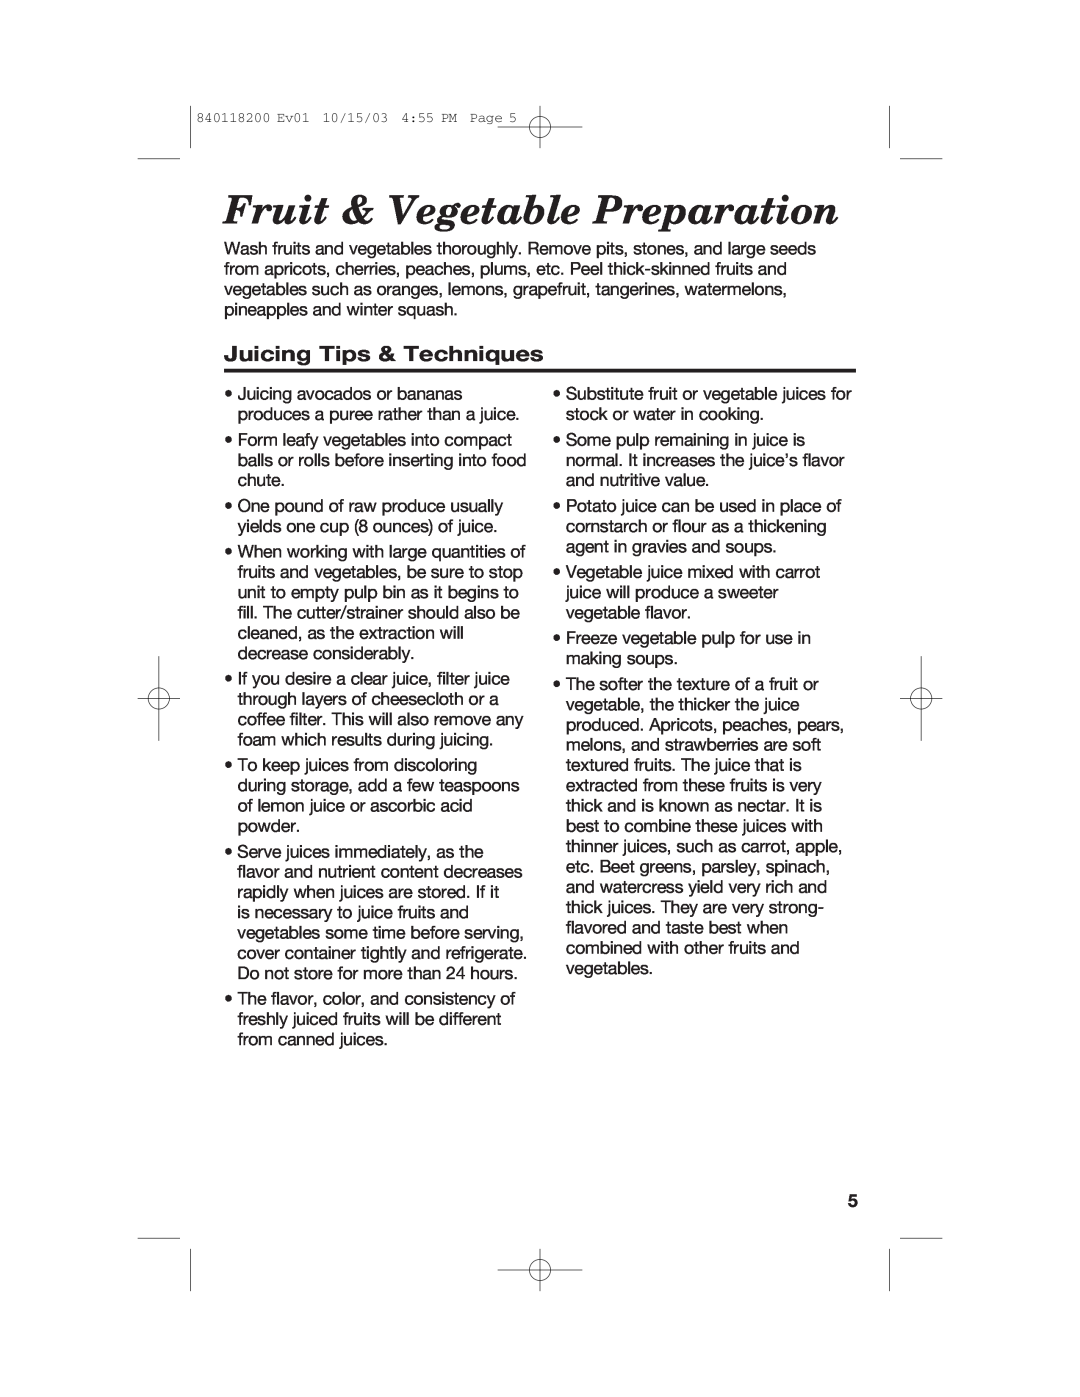 Hamilton Beach 67900 manual Fruit & Vegetable Preparation, Juicing Tips & Techniques 